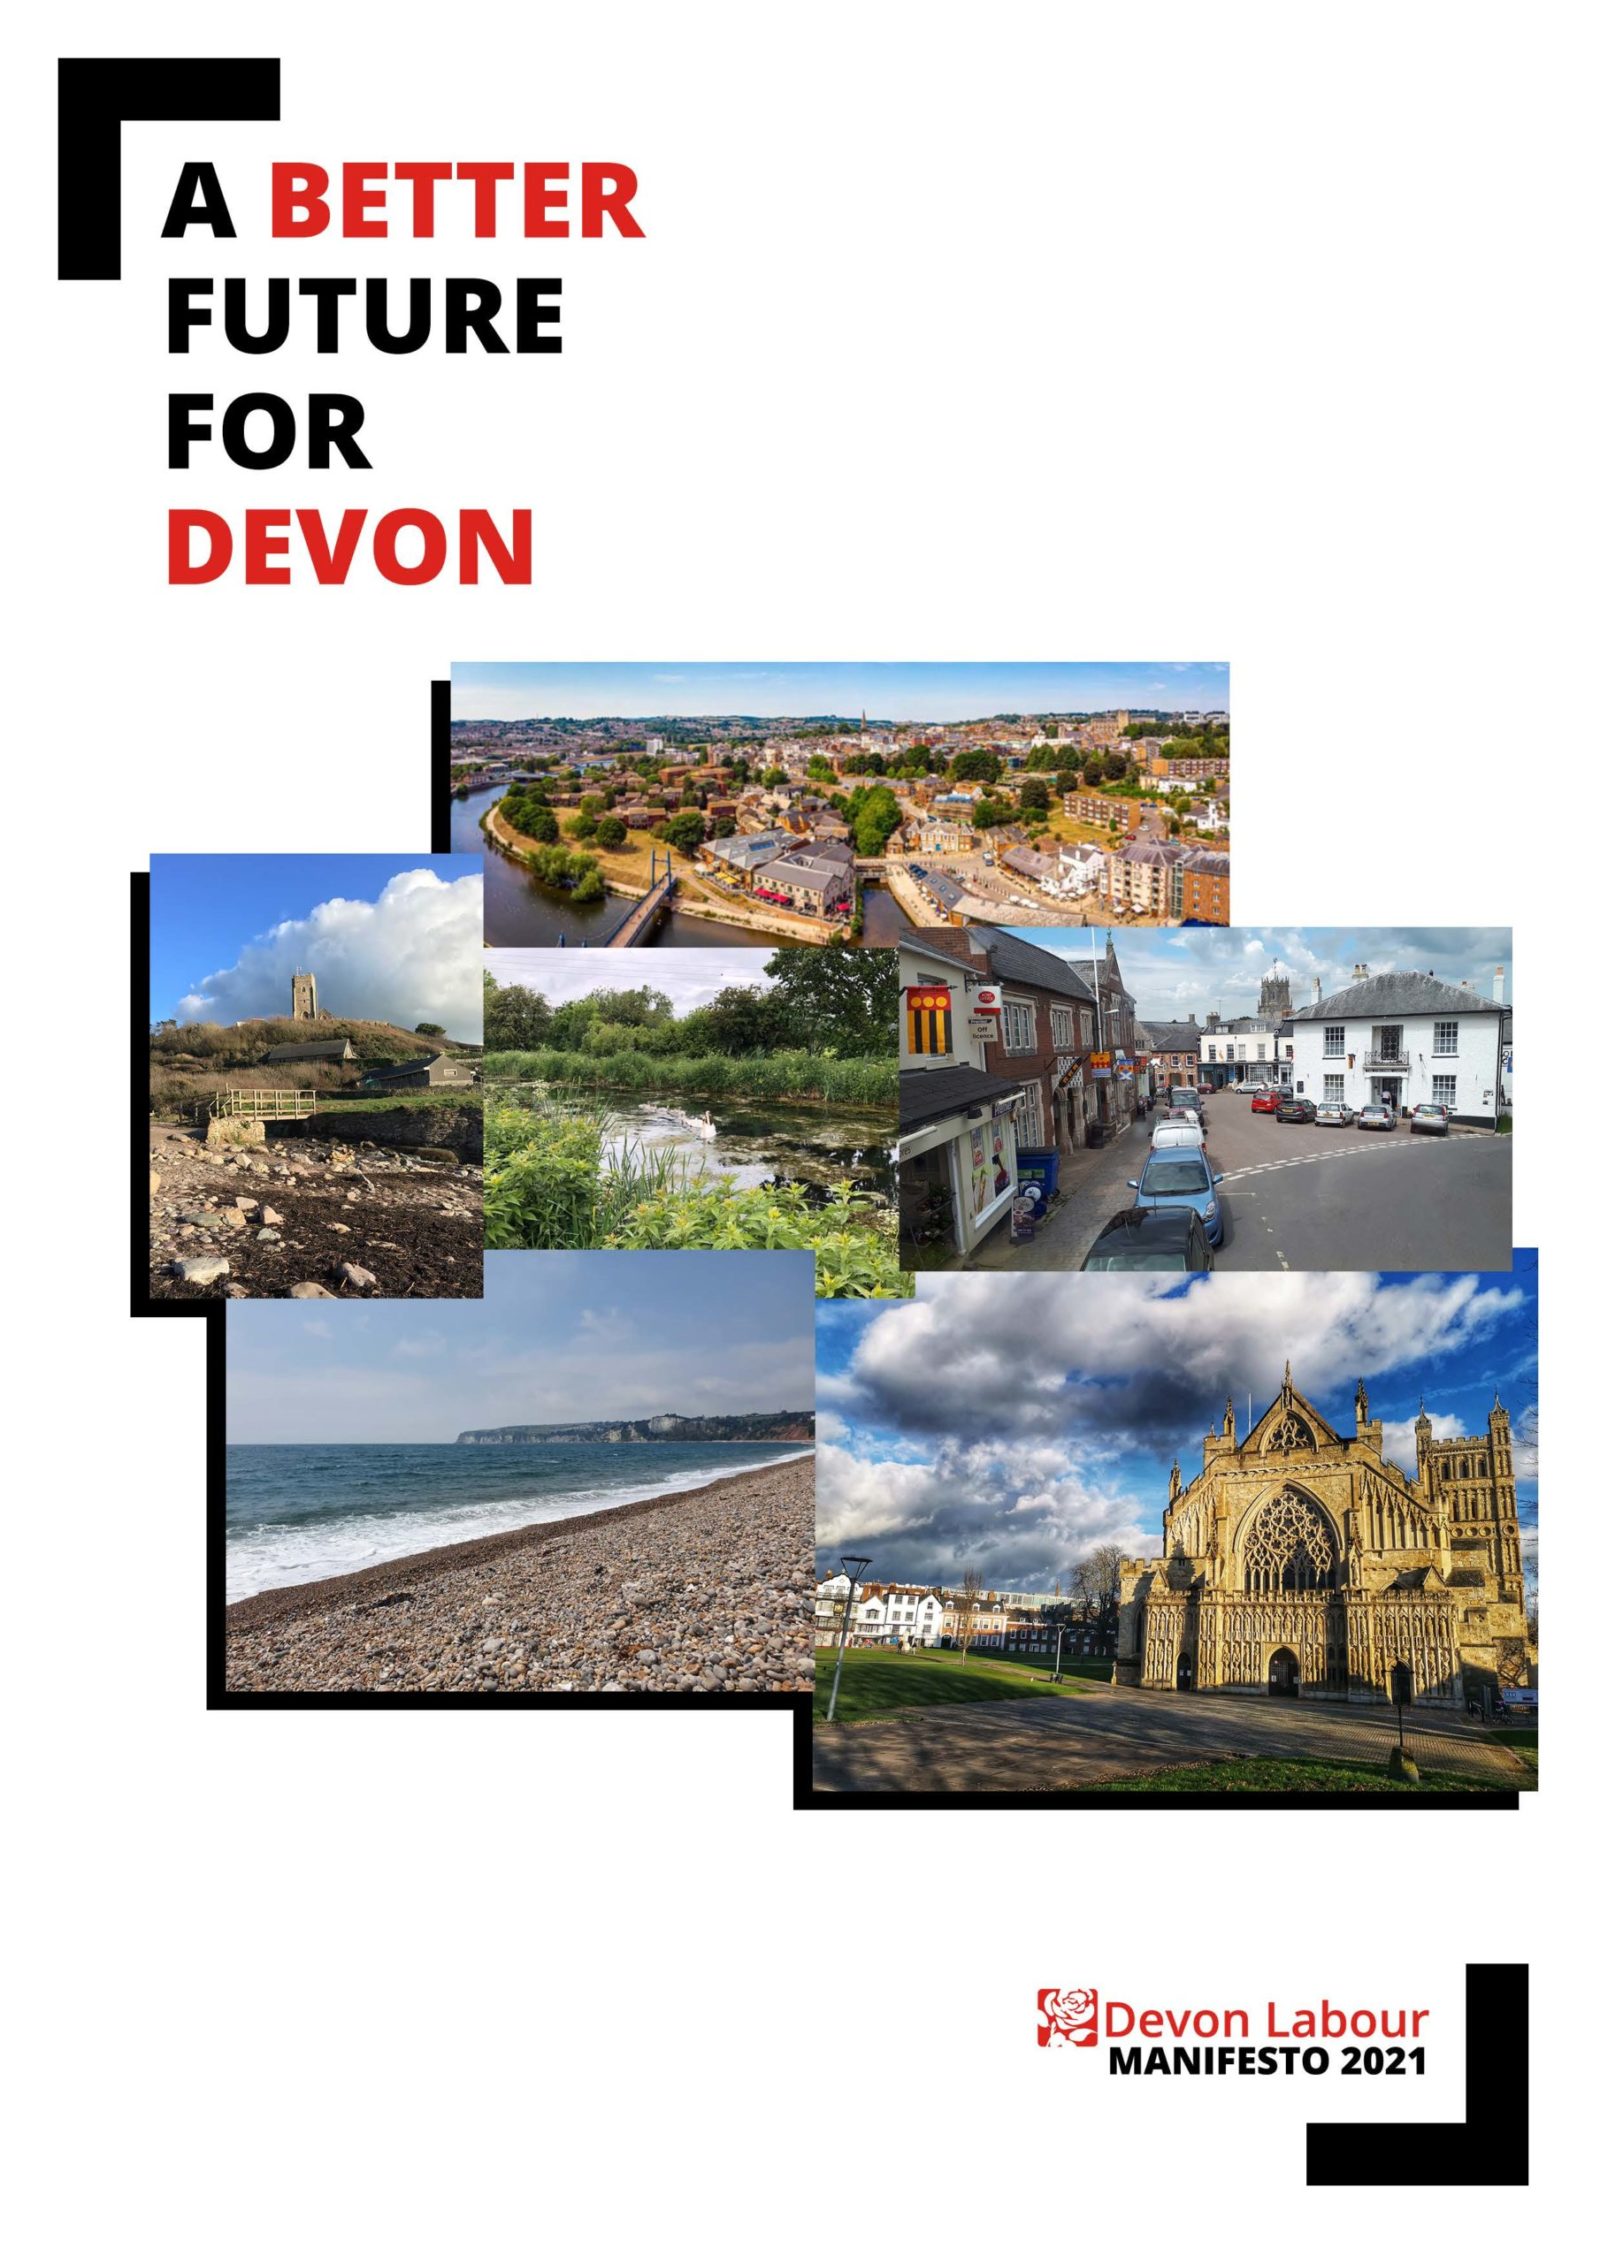 Labour Devon Manifesto 2021 Scenes of Devon